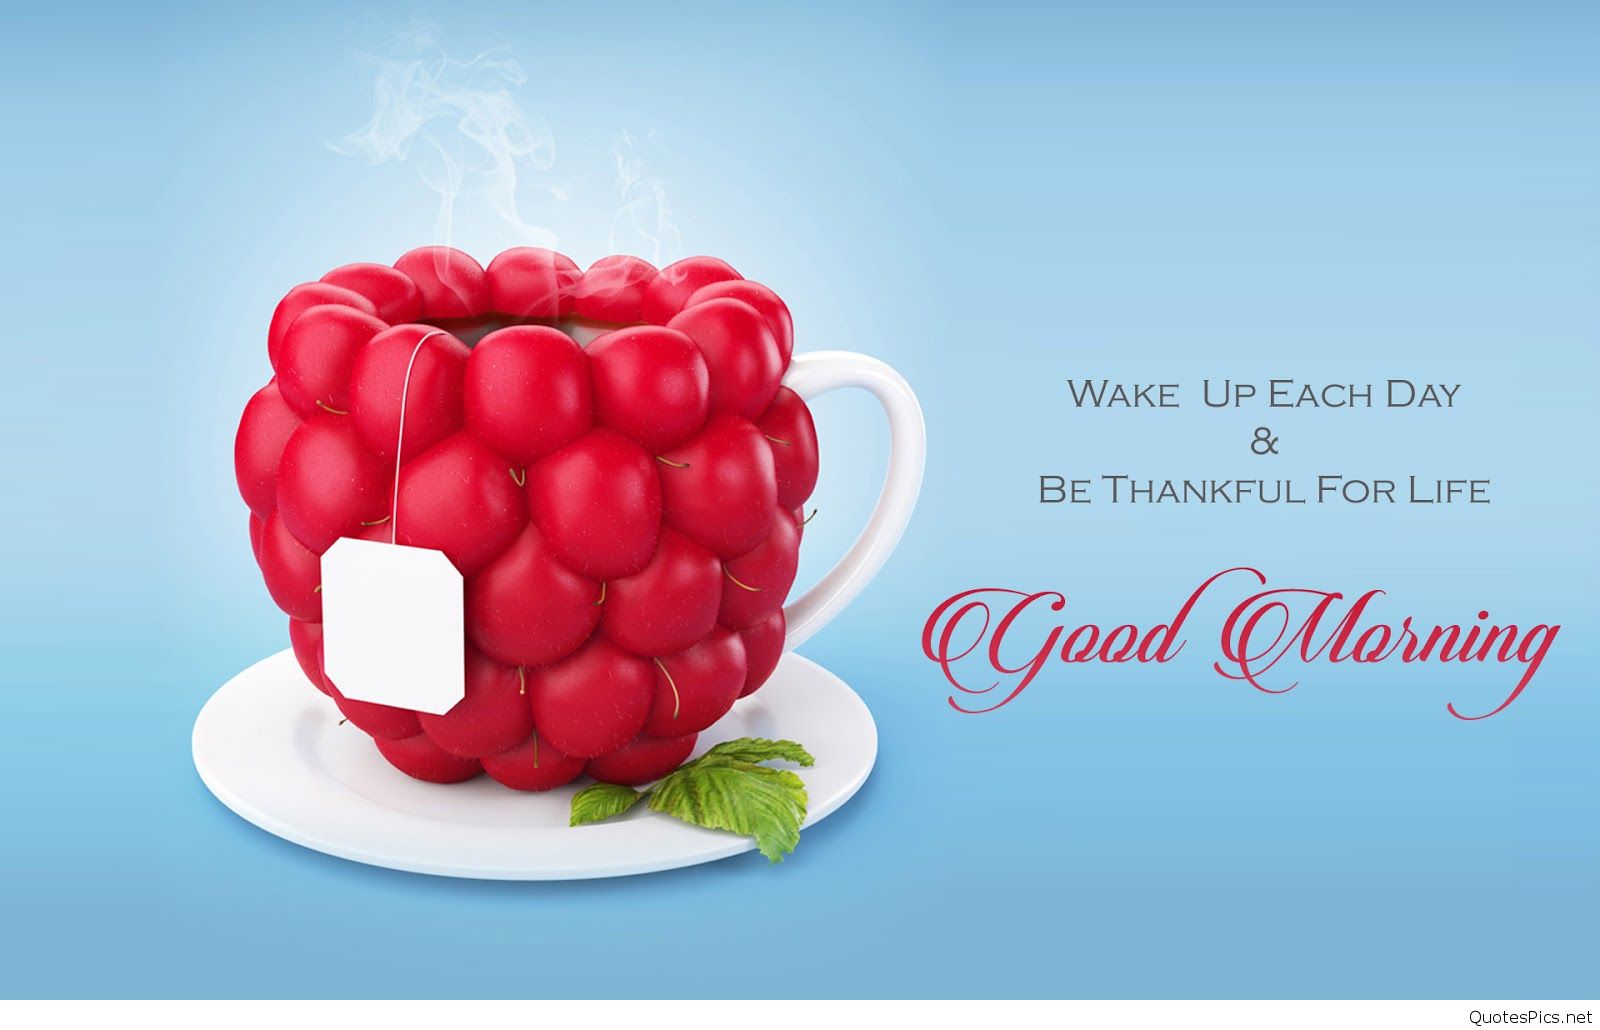 good morning wallpaper download,natural foods,fruit,food,berry,sweetness